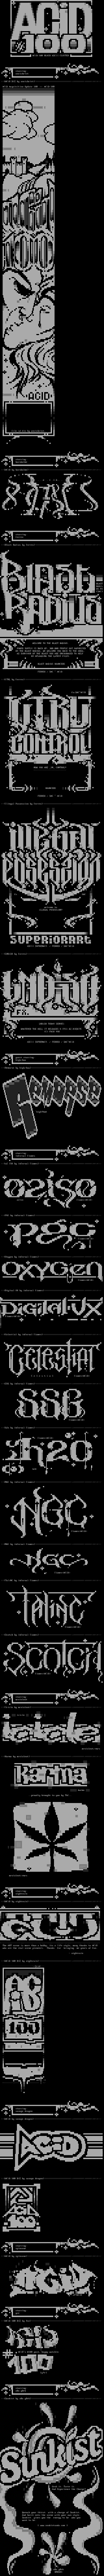 ACiD-100 Block ASCII Cluster by Multiple Artists